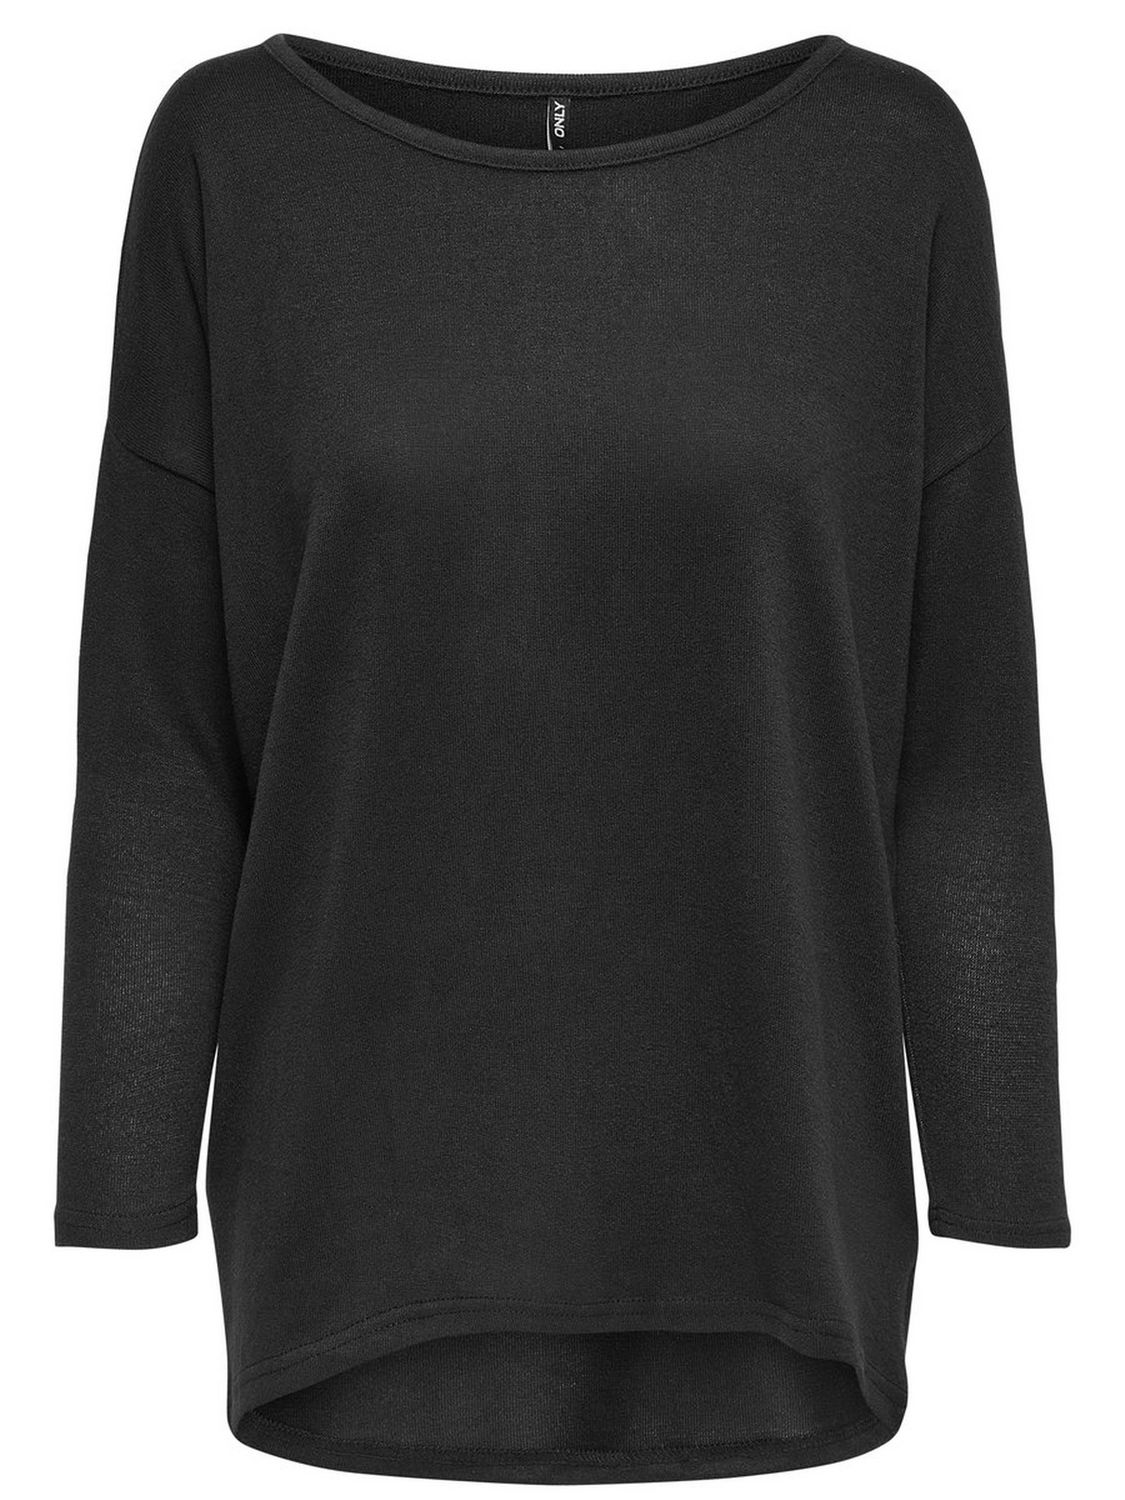 Only Elcos Solid 3/4 Ärmel T-shirt S Mesa Rose / Melange günstig online kaufen